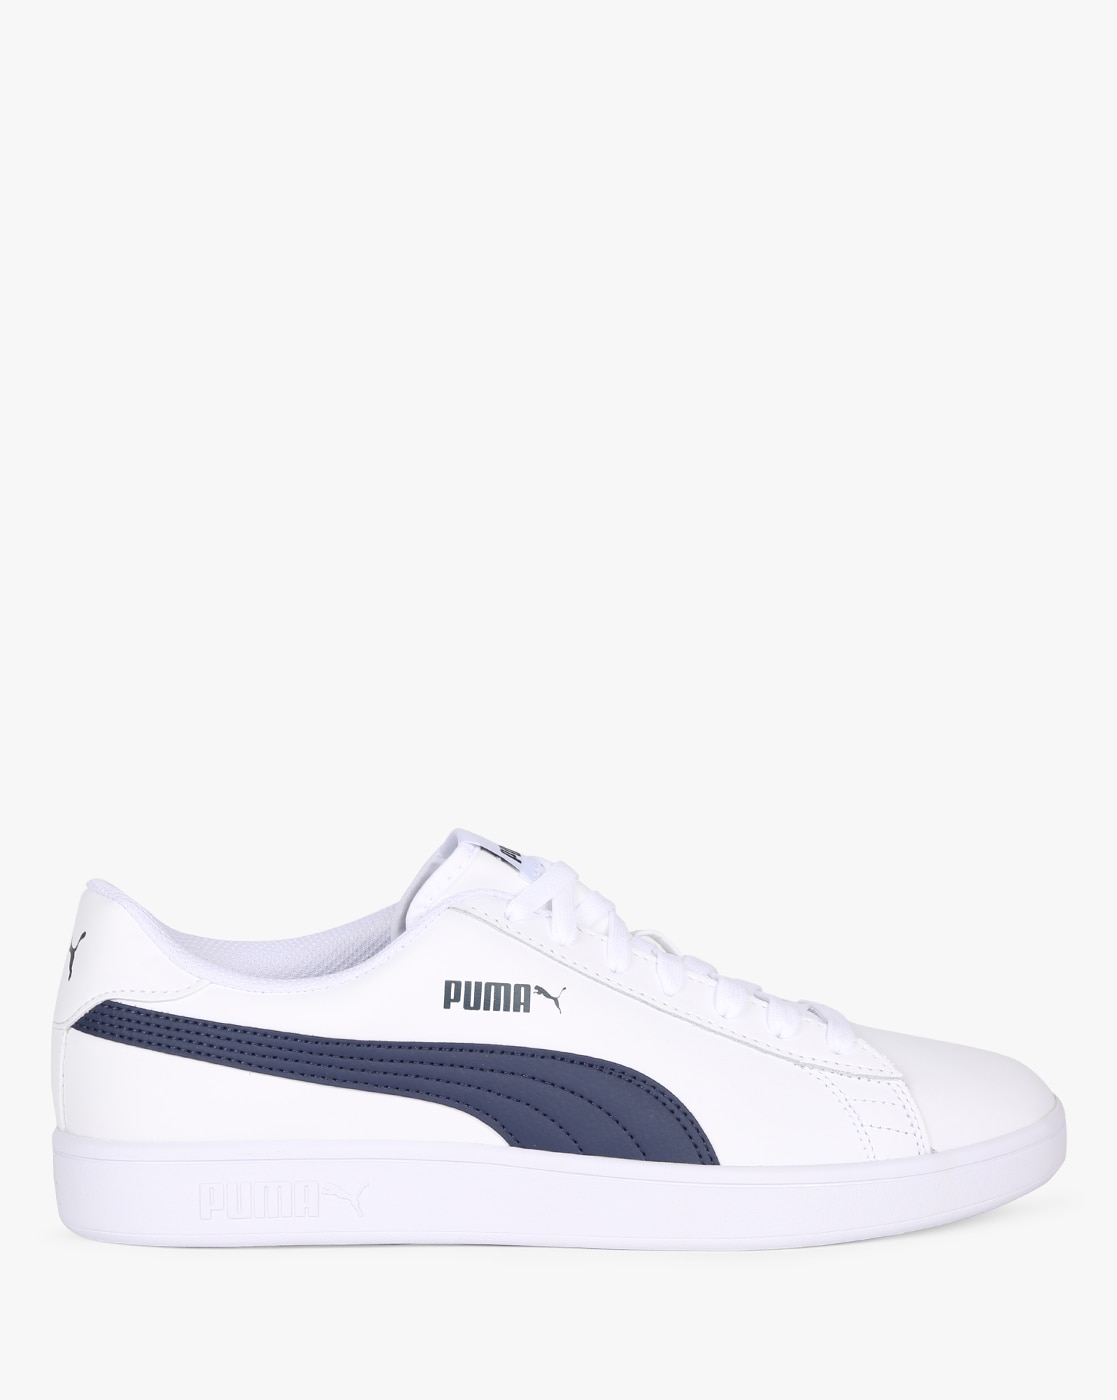 puma white black sneakers